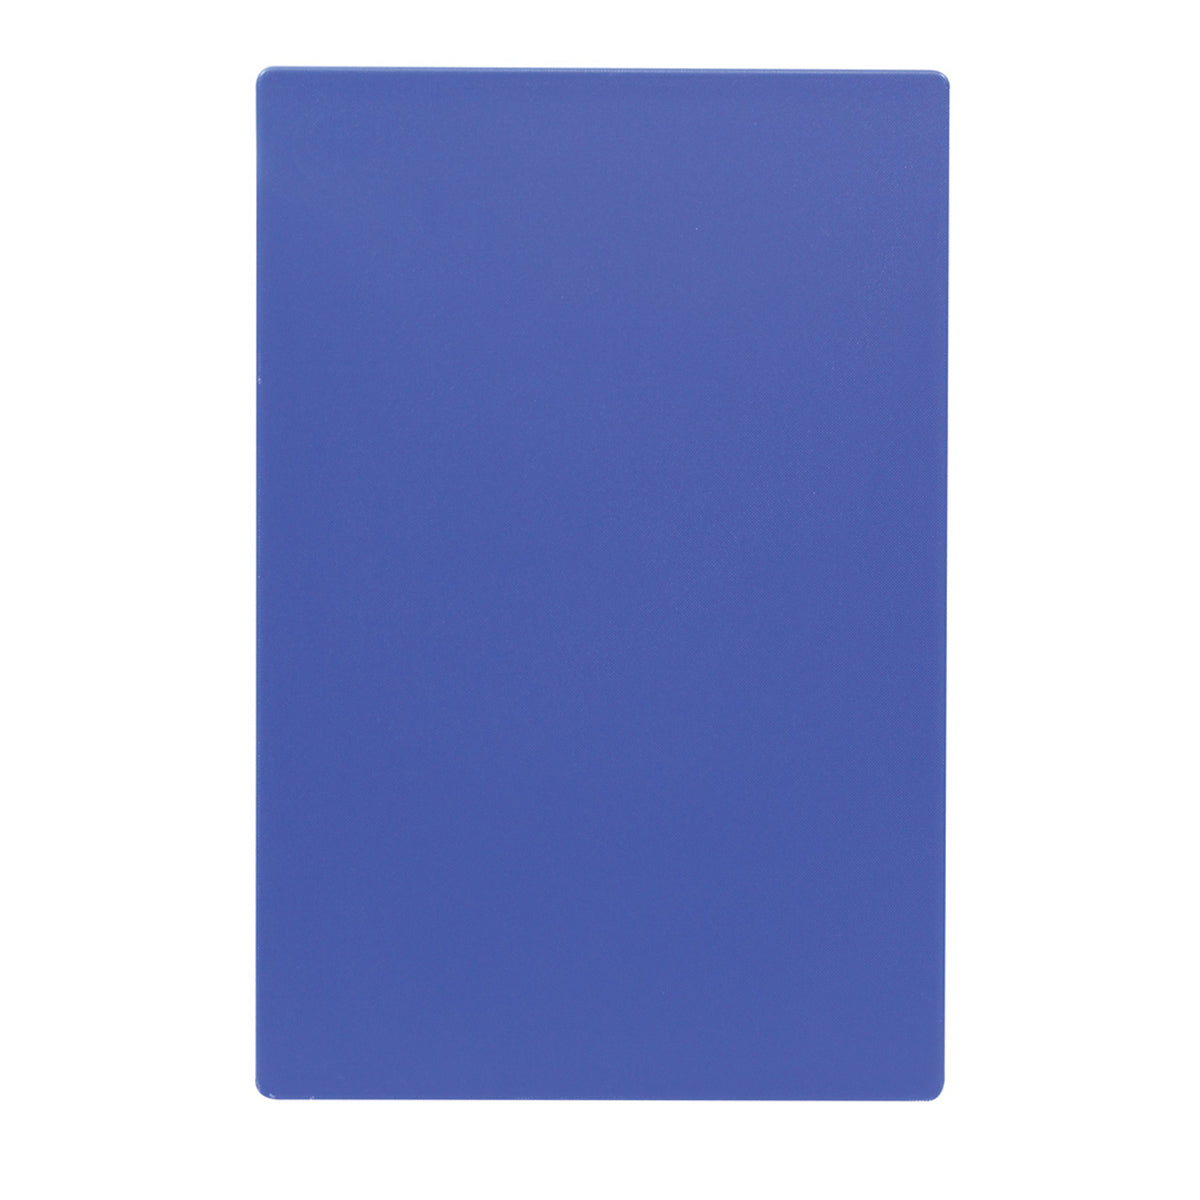 Tabla para Picar de Plástico Azul de 46 x 61 cm NFS